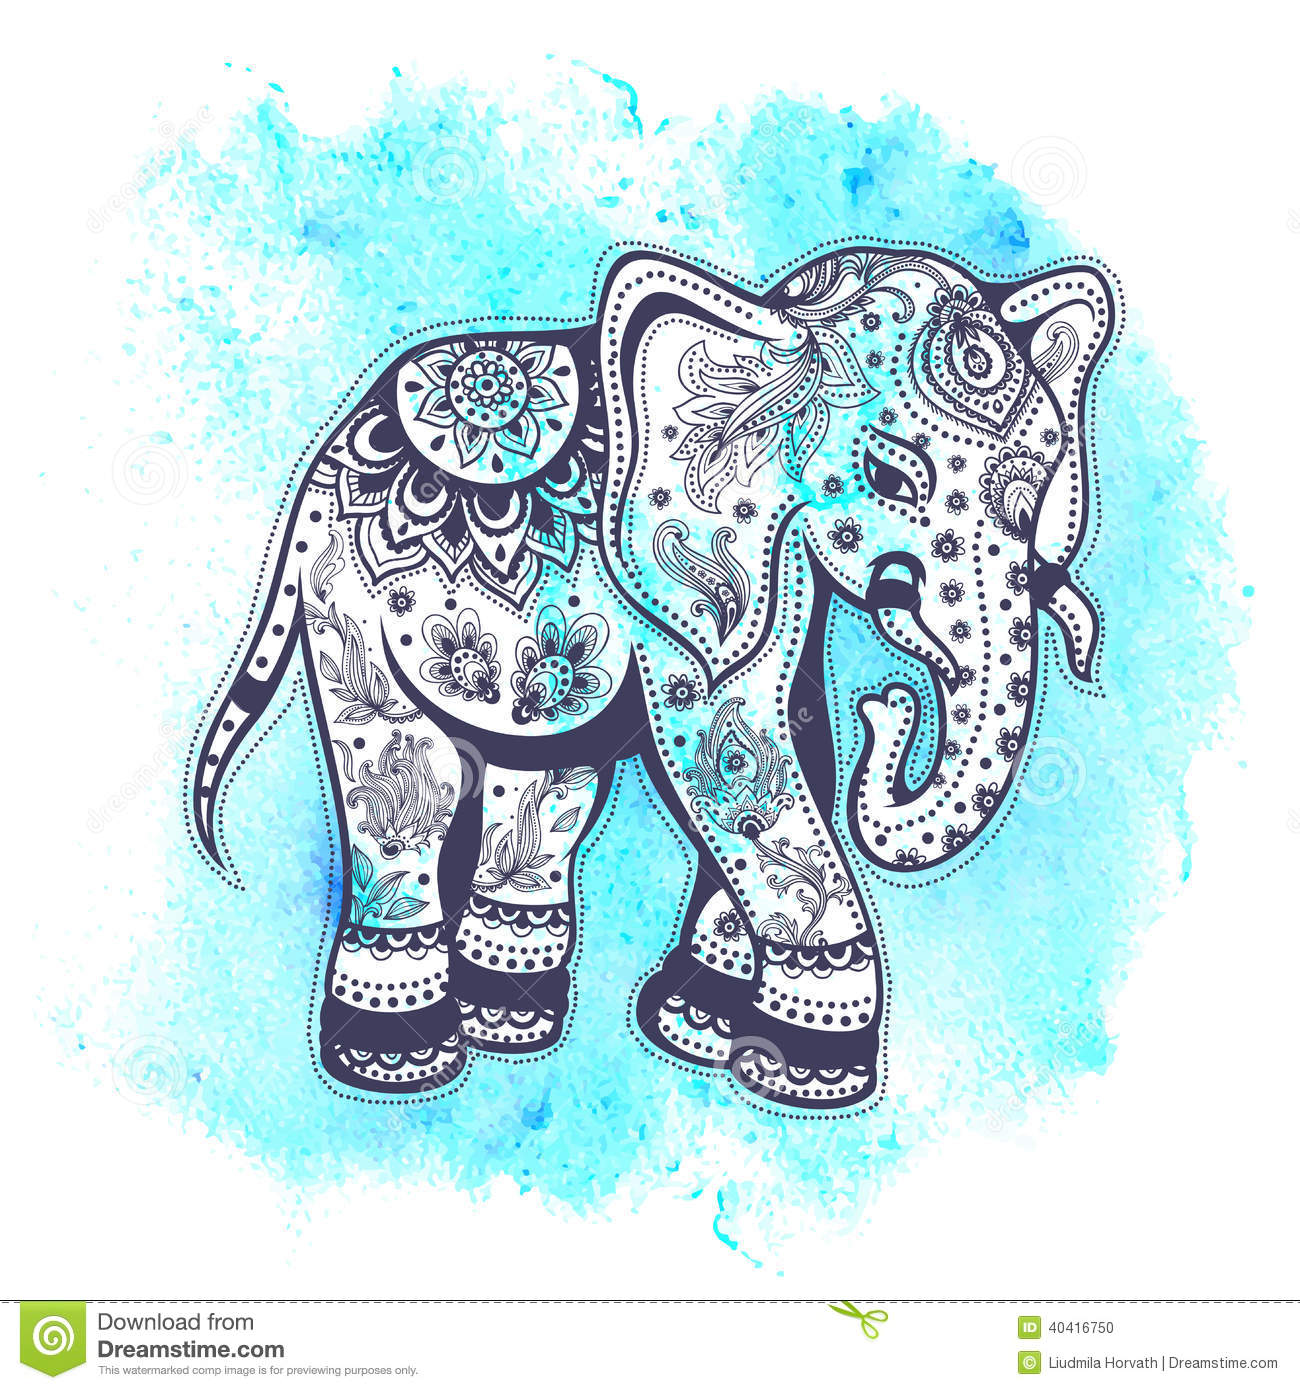 Vintage Elephant Illustration With Blue Watercolor Background